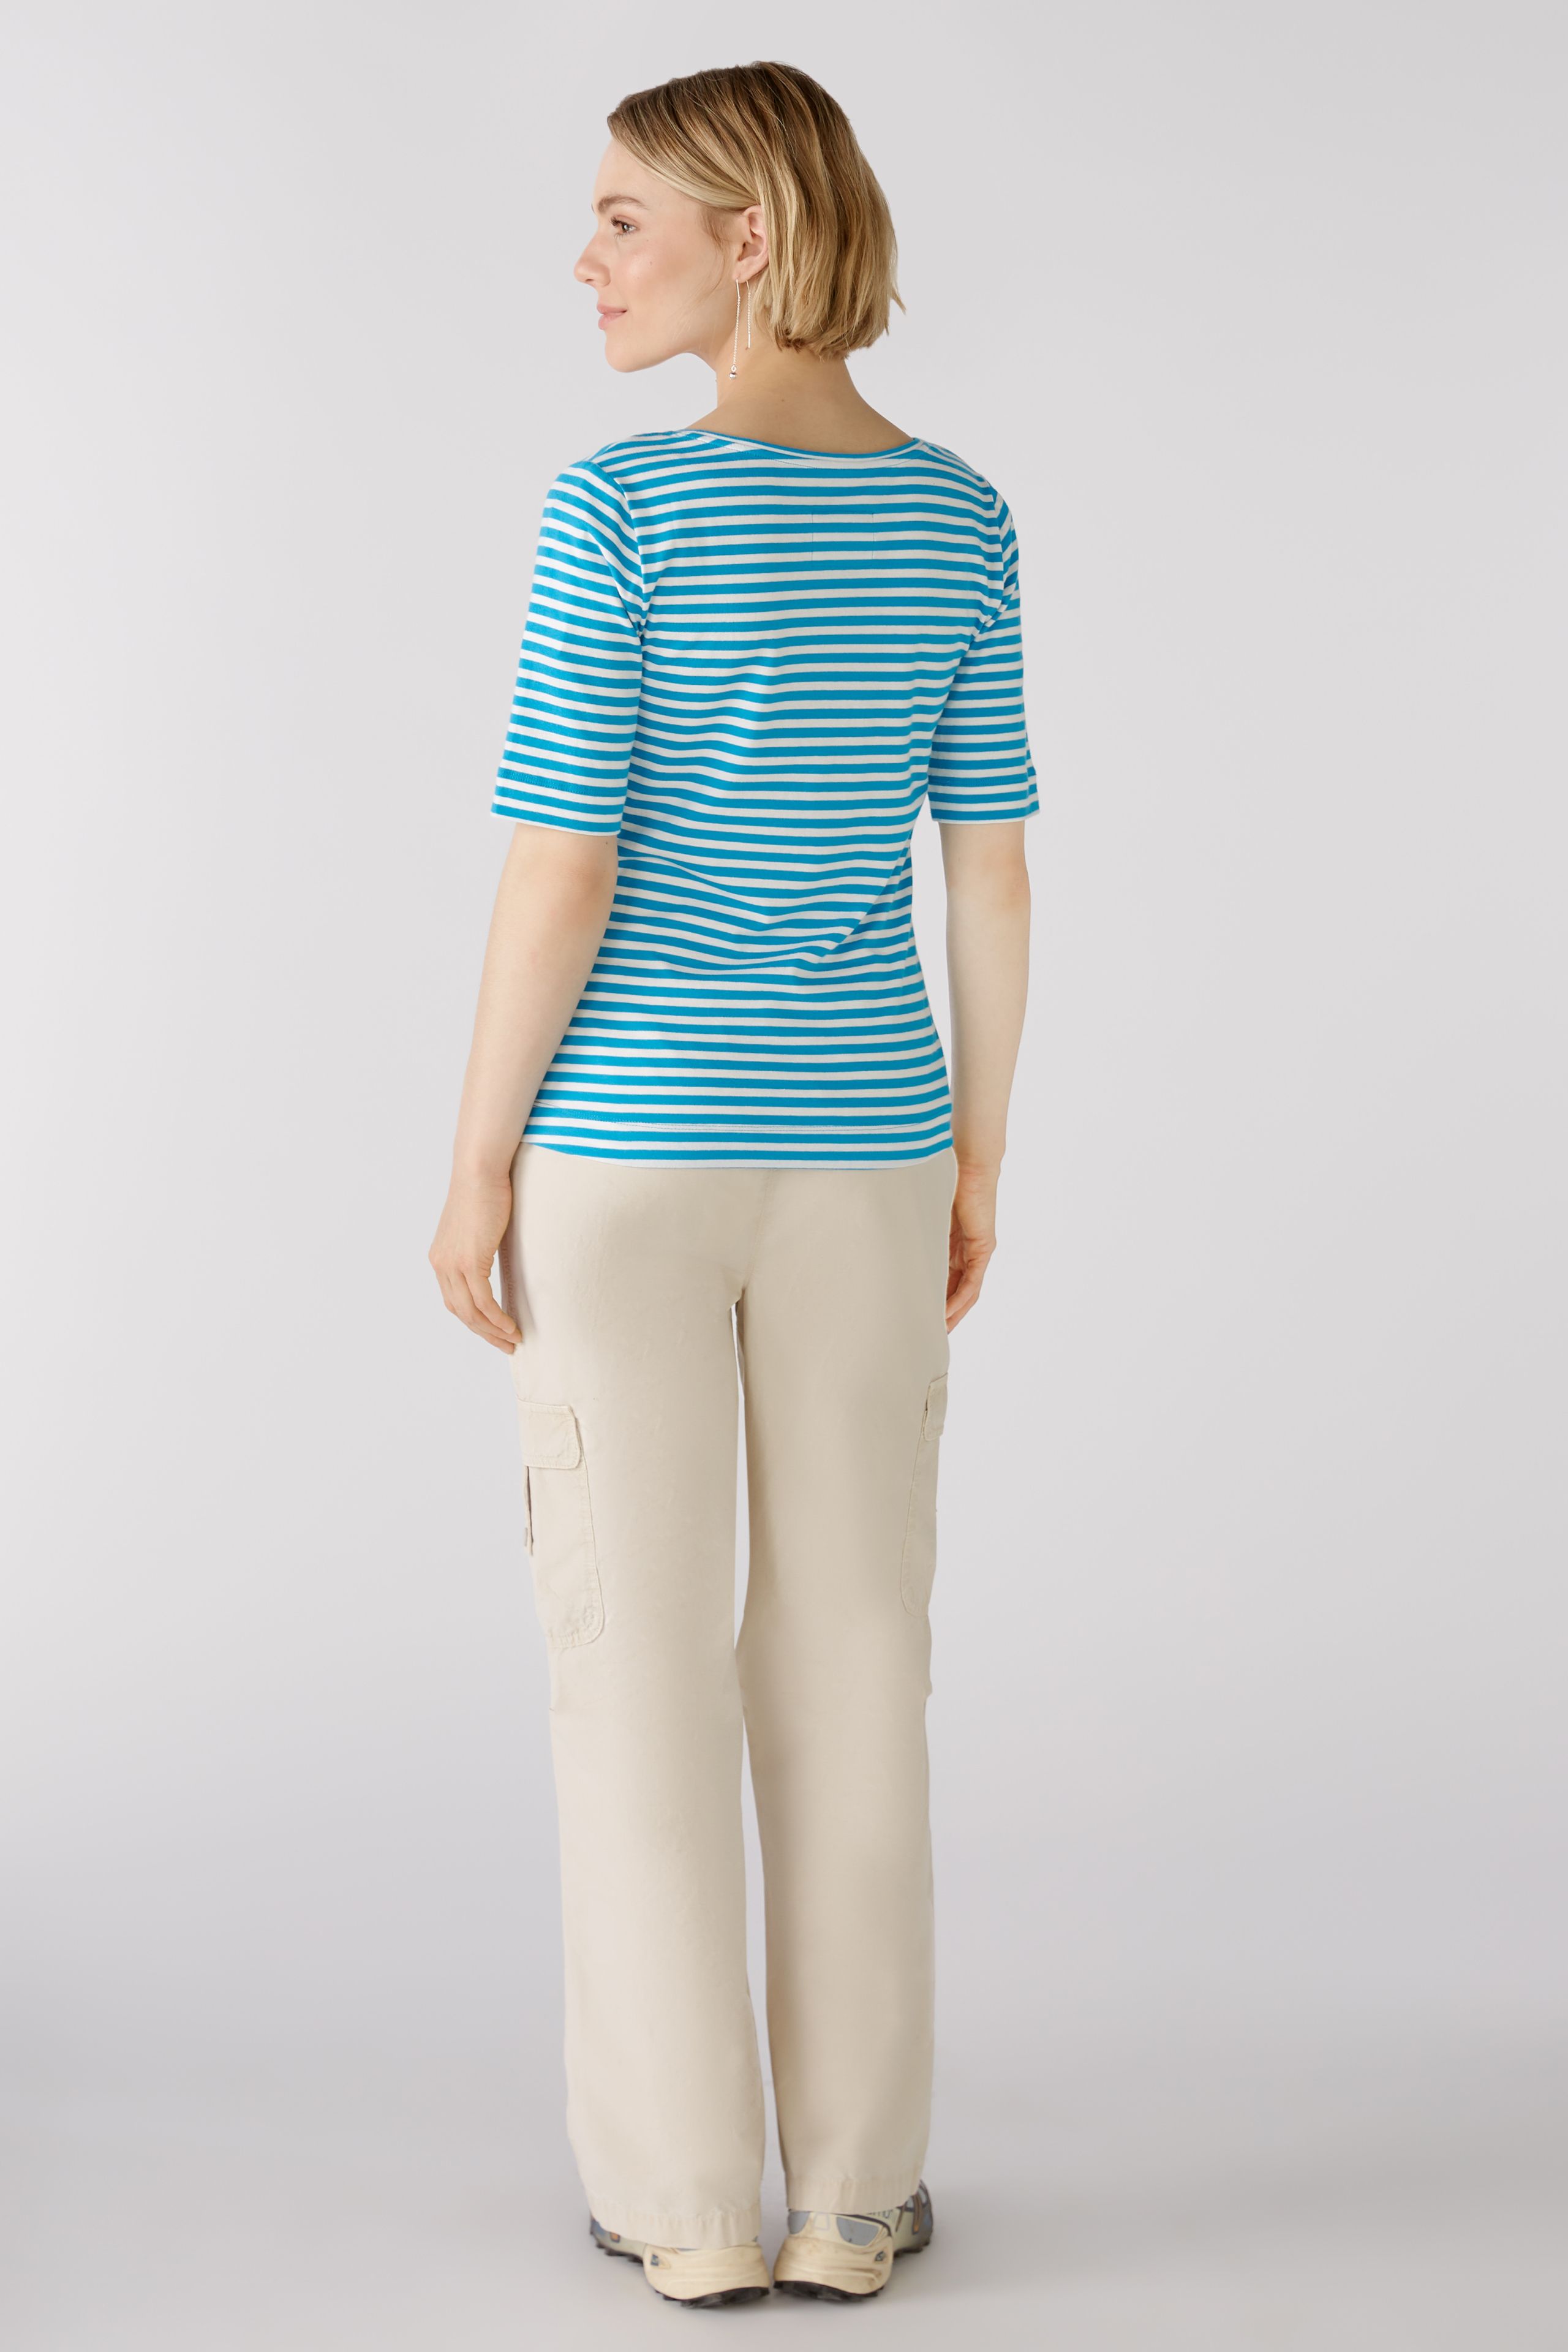 Oui T-Shirt 1/2 Arm  fine Stripe 38 light blue